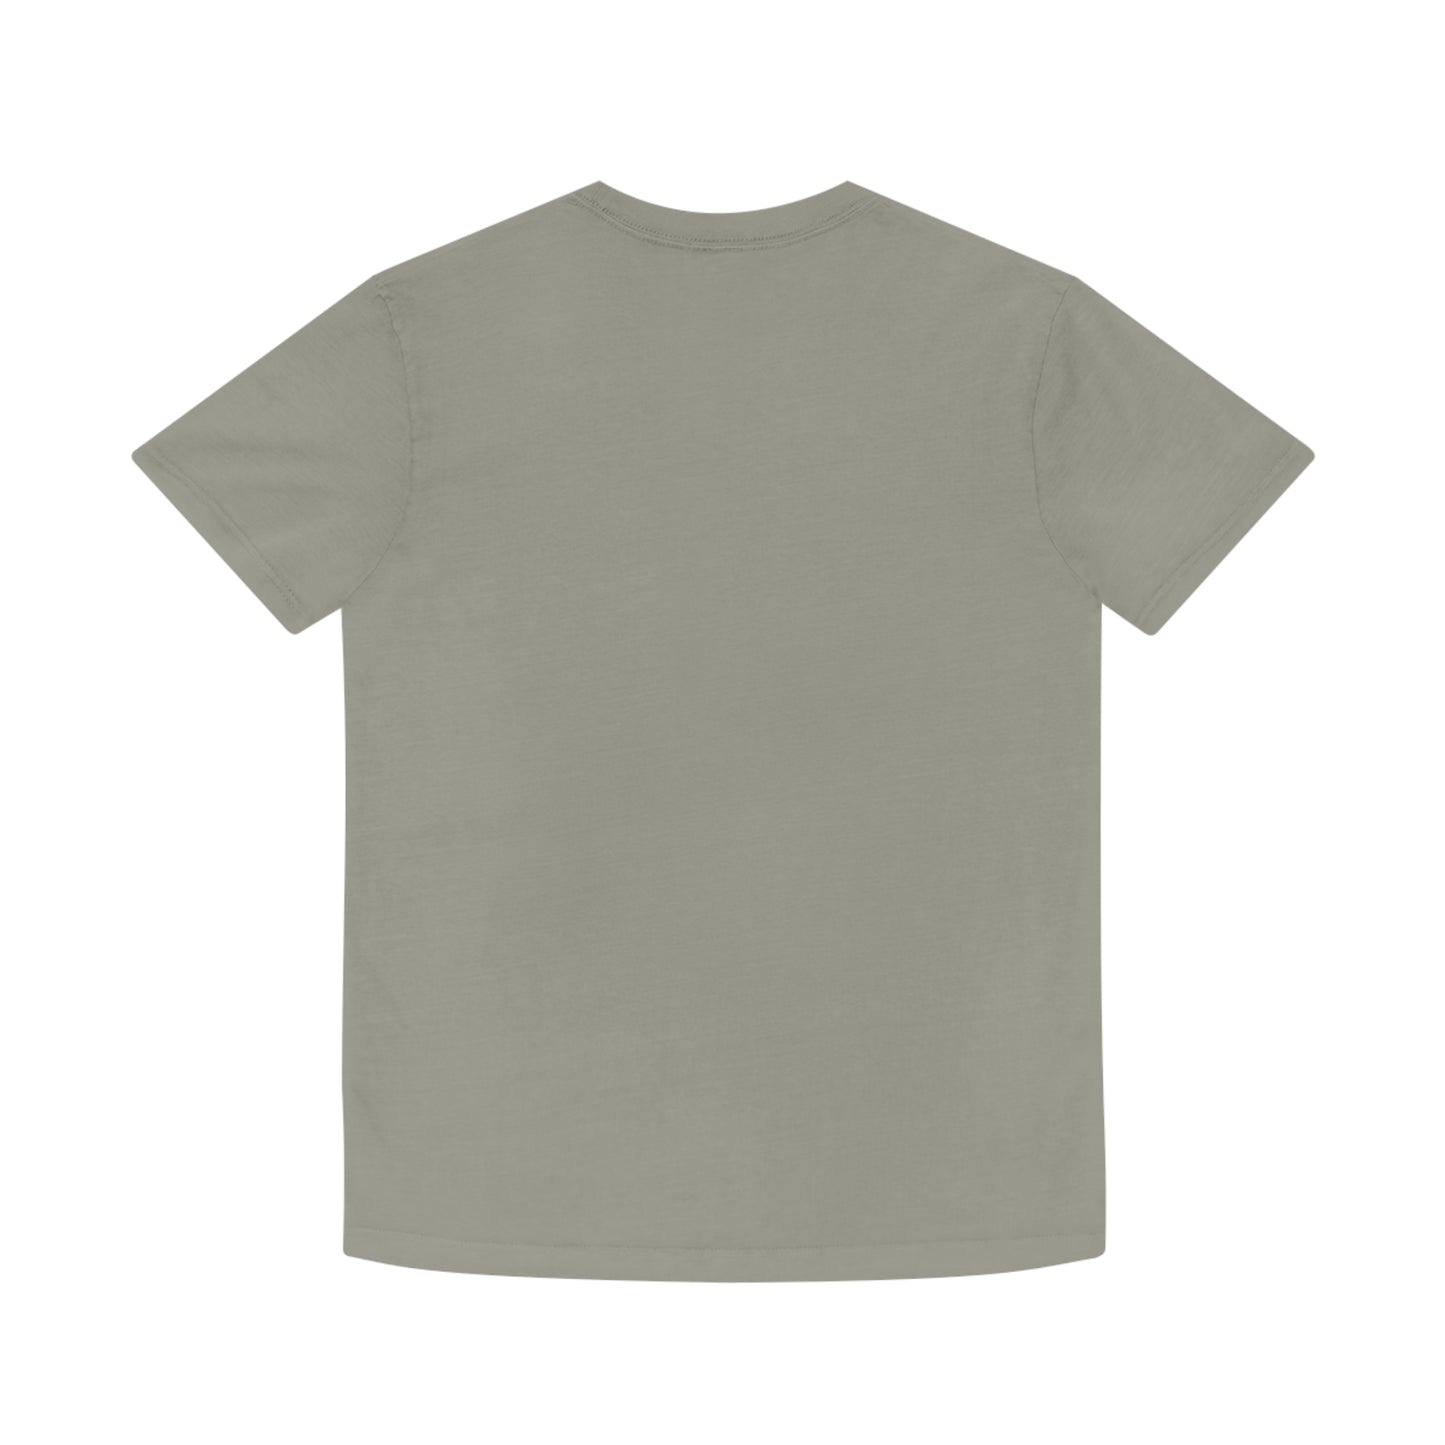 Cotton T-Shirt Northern Beaches Australia free logo design